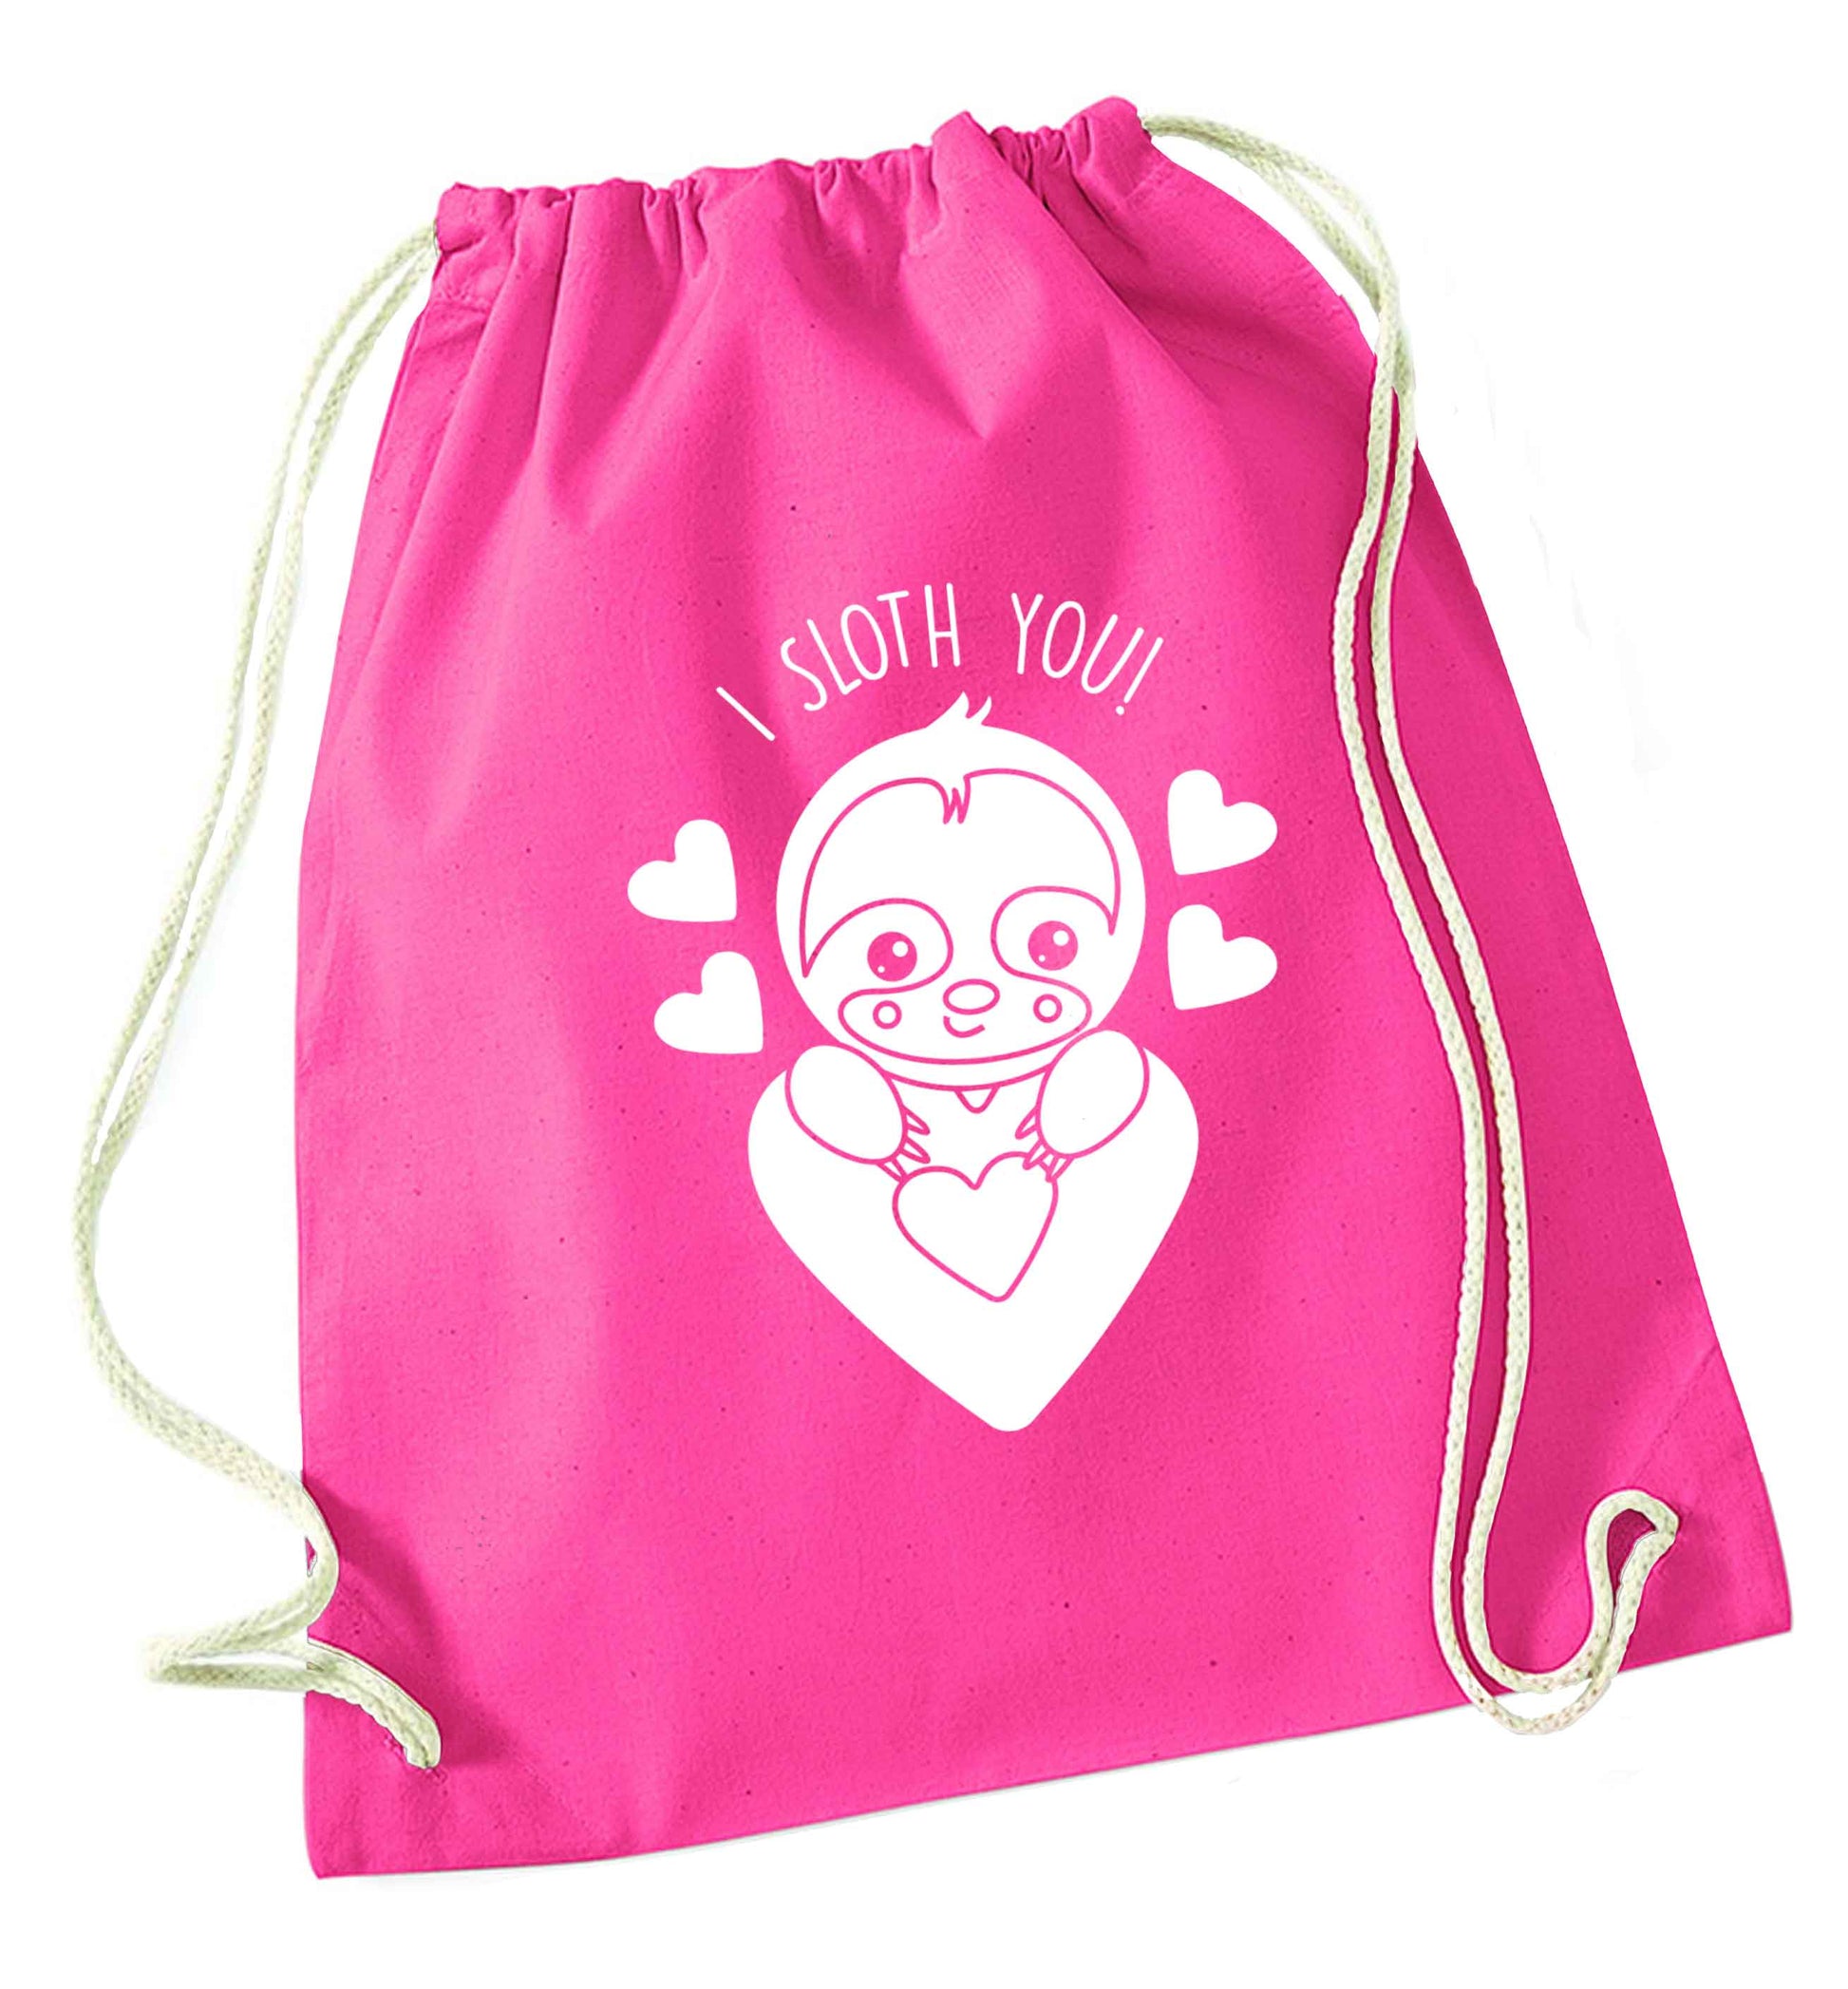 I sloth you pink drawstring bag